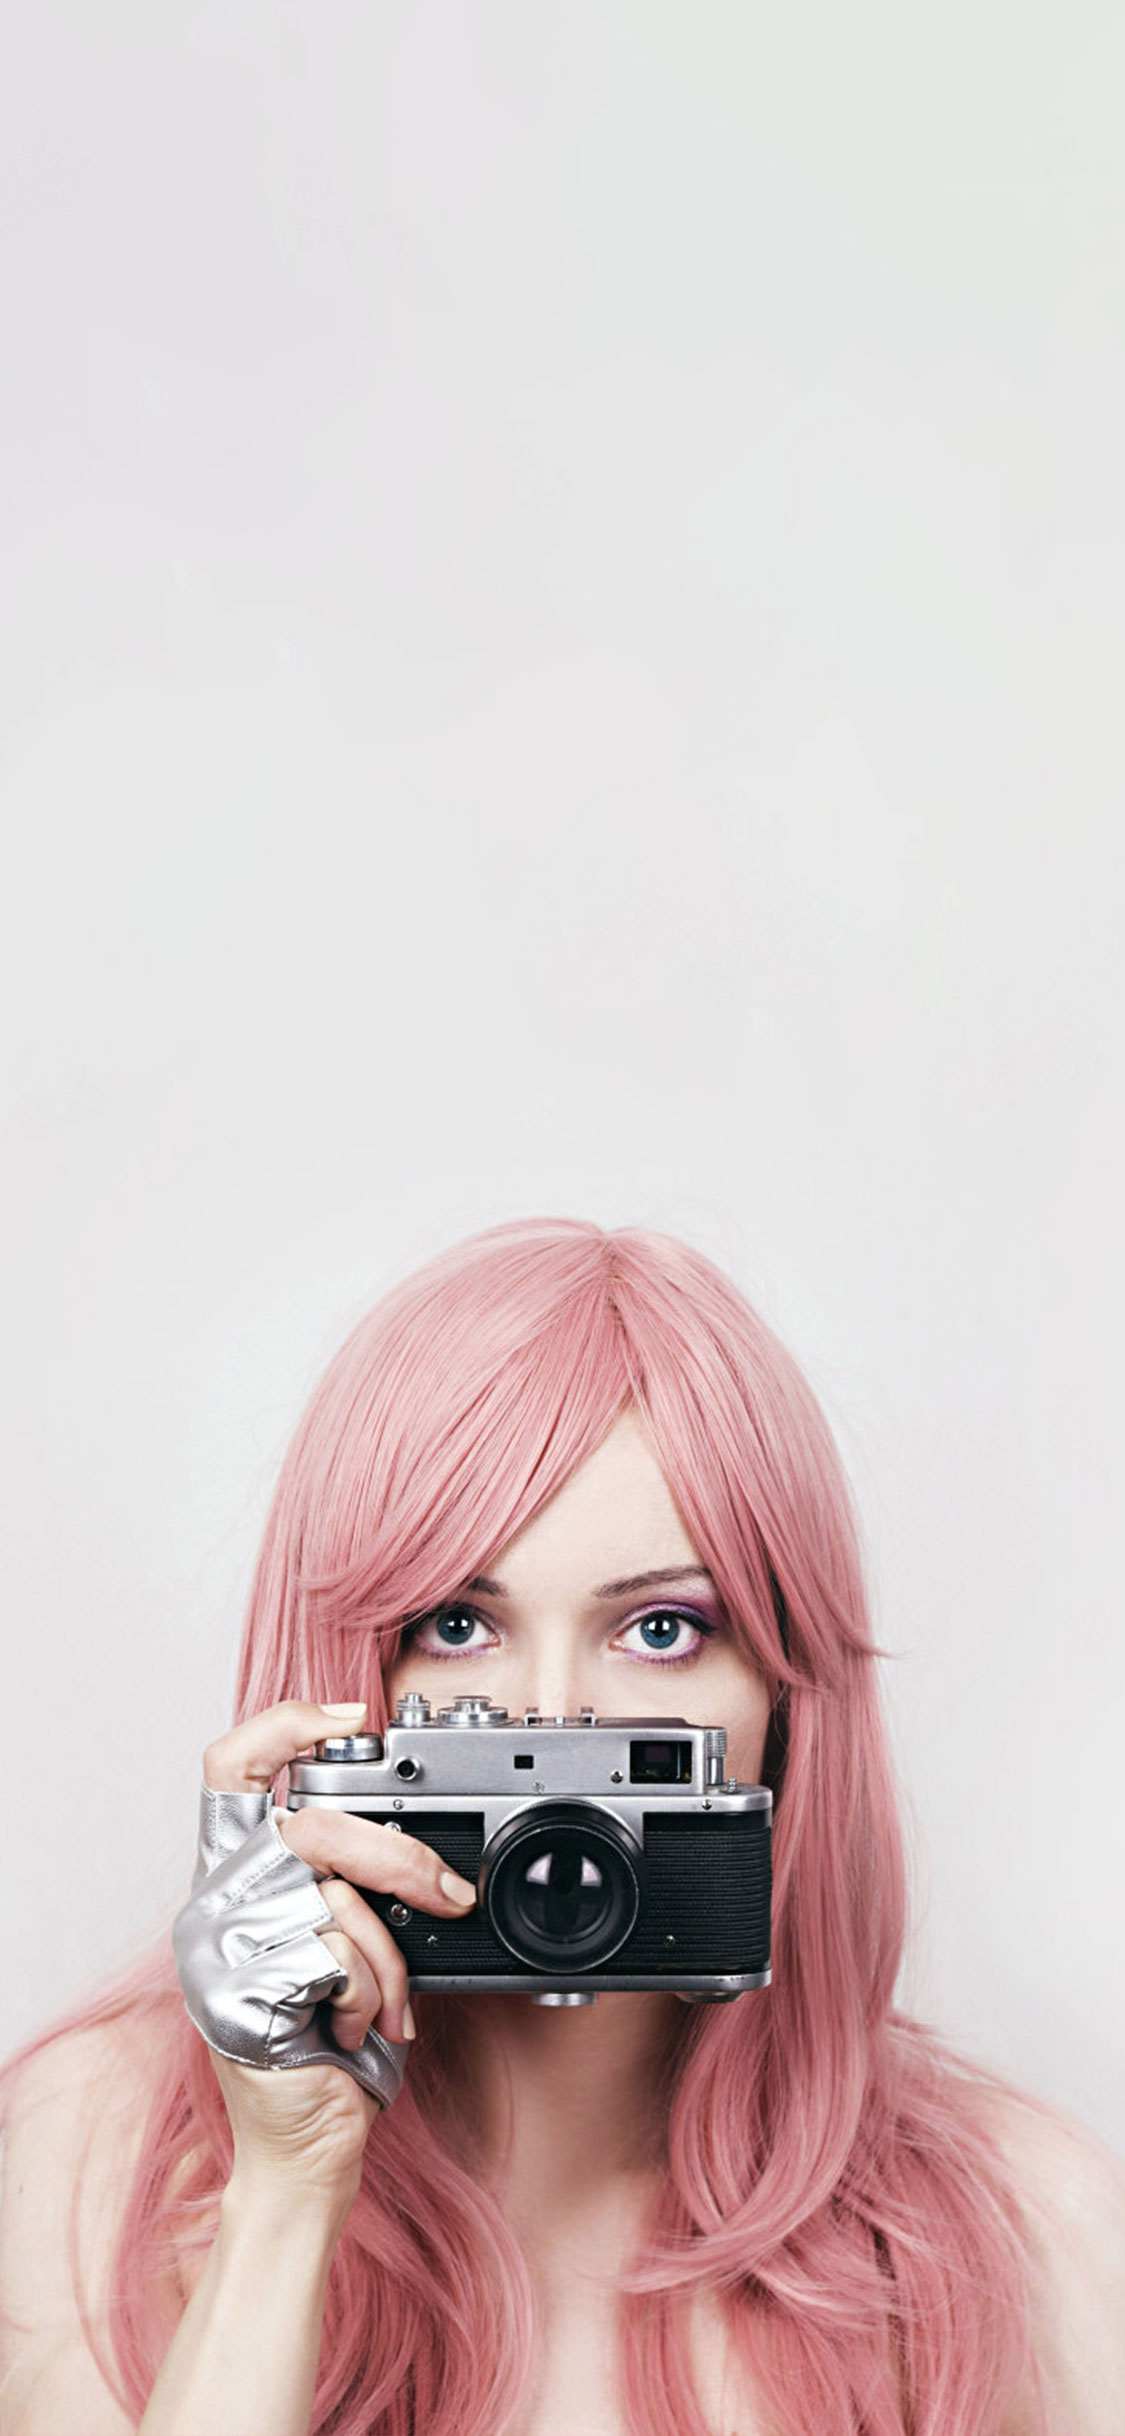 Cool Girl Holding A Camera - Iphone Girly Wallpaper Cute - HD Wallpaper 